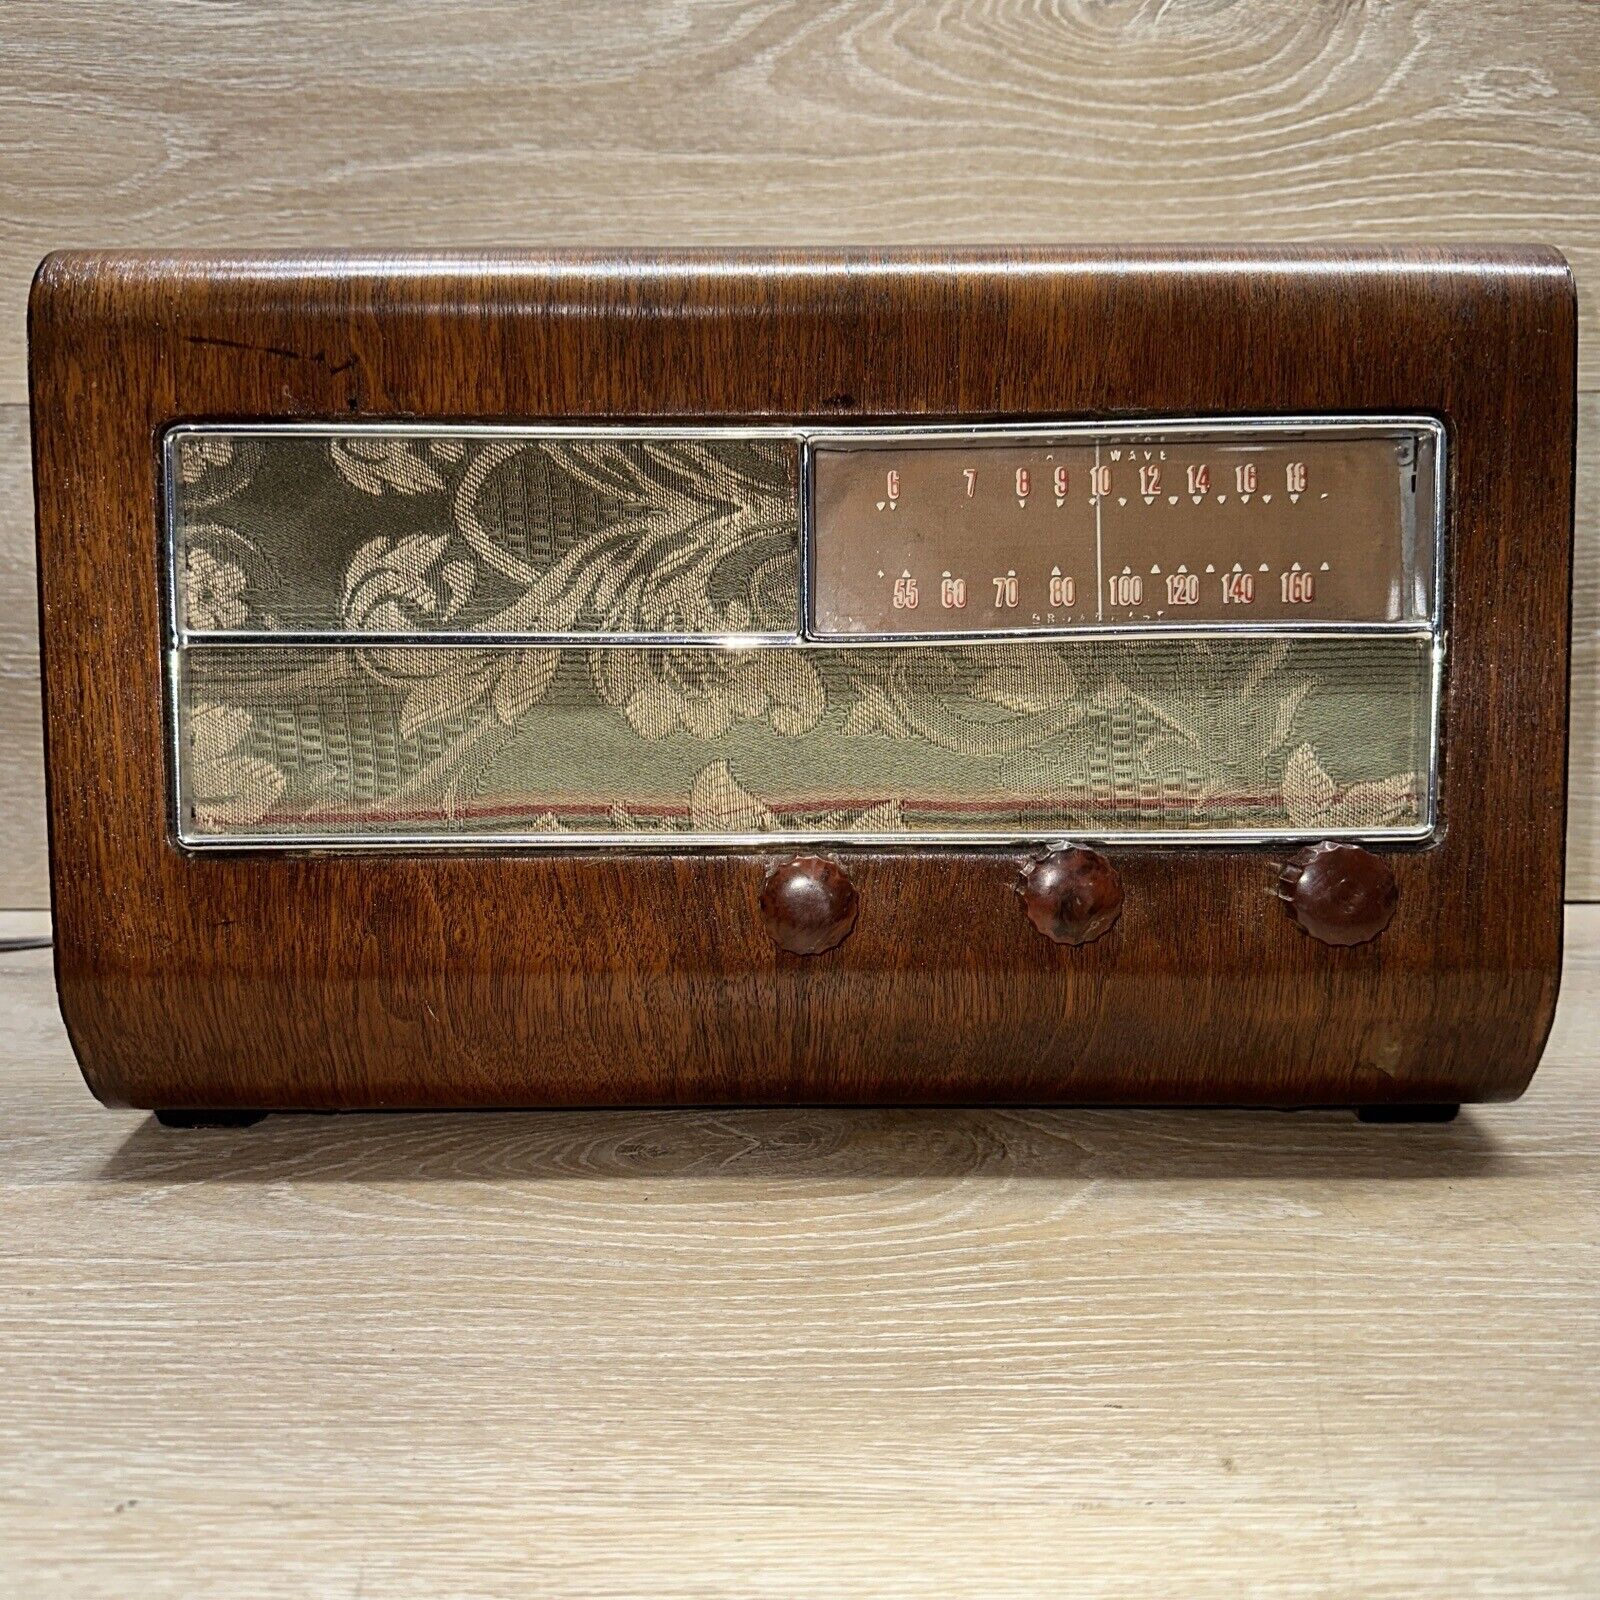 Detrola? GLF? Vintage Rare Tube Shortwave Radio Wood Case Old Radio 1940's Works